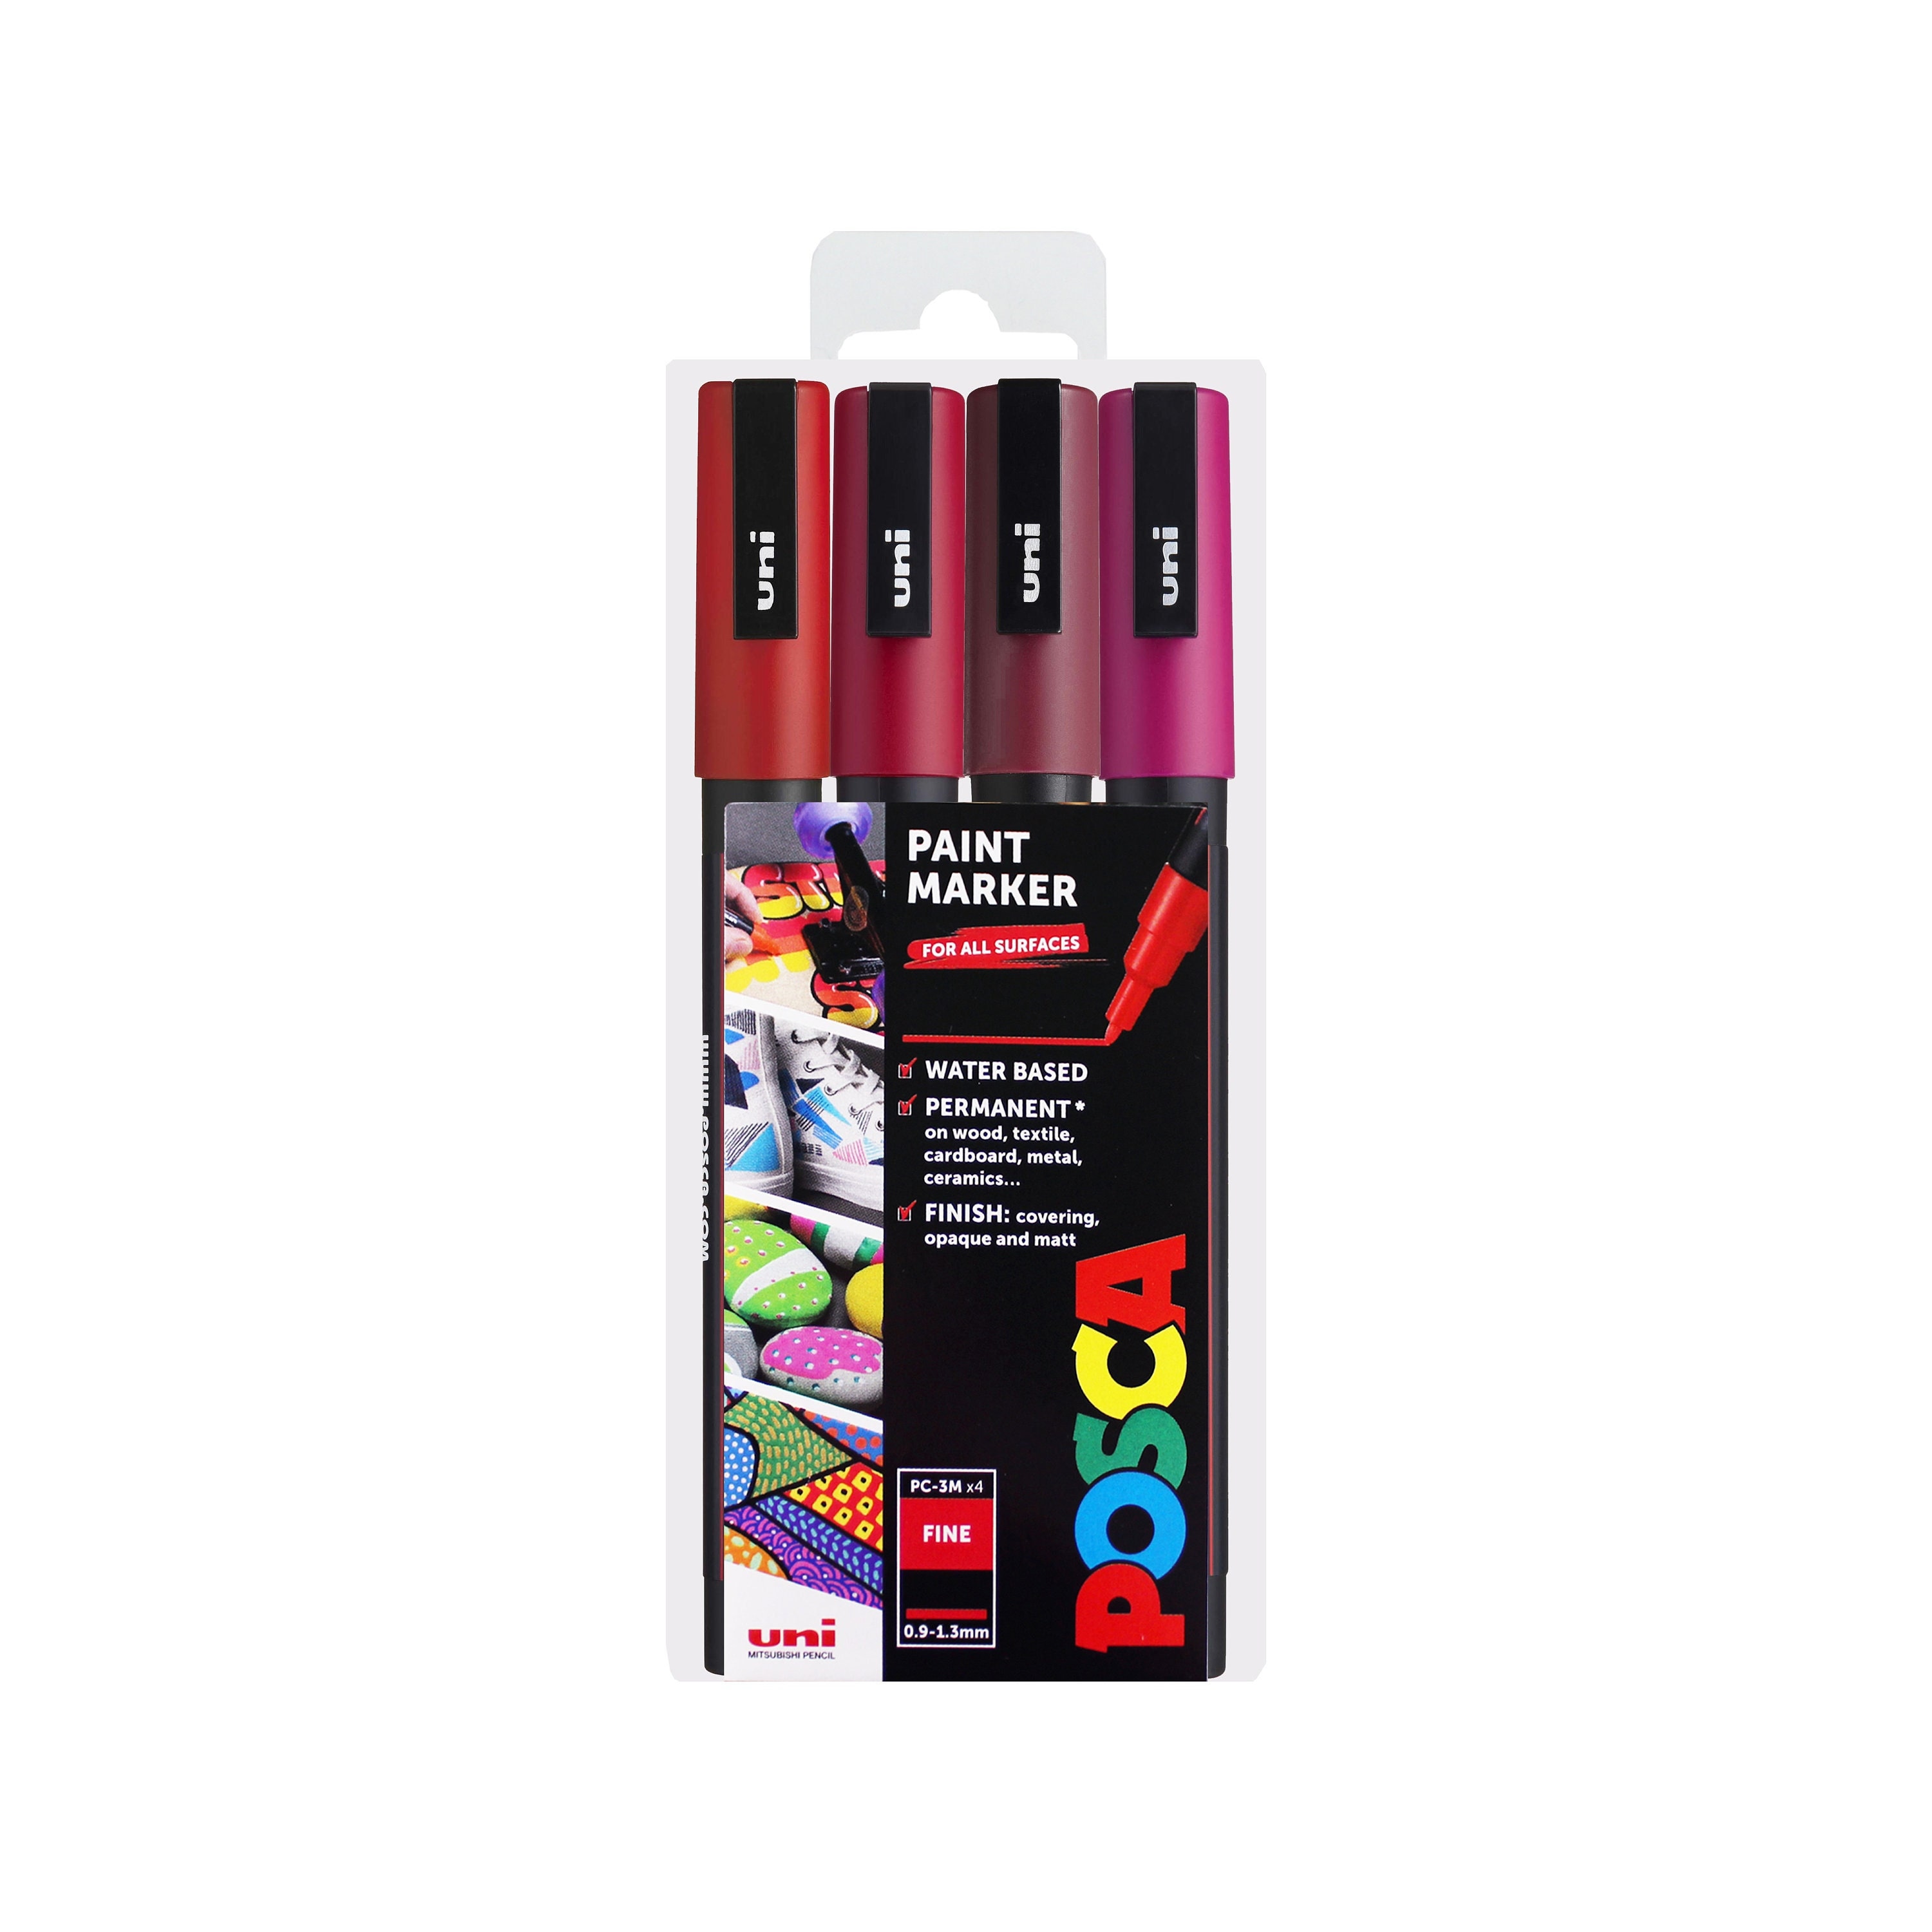 Posca Paint Pens PC3MR Fine -  Denmark